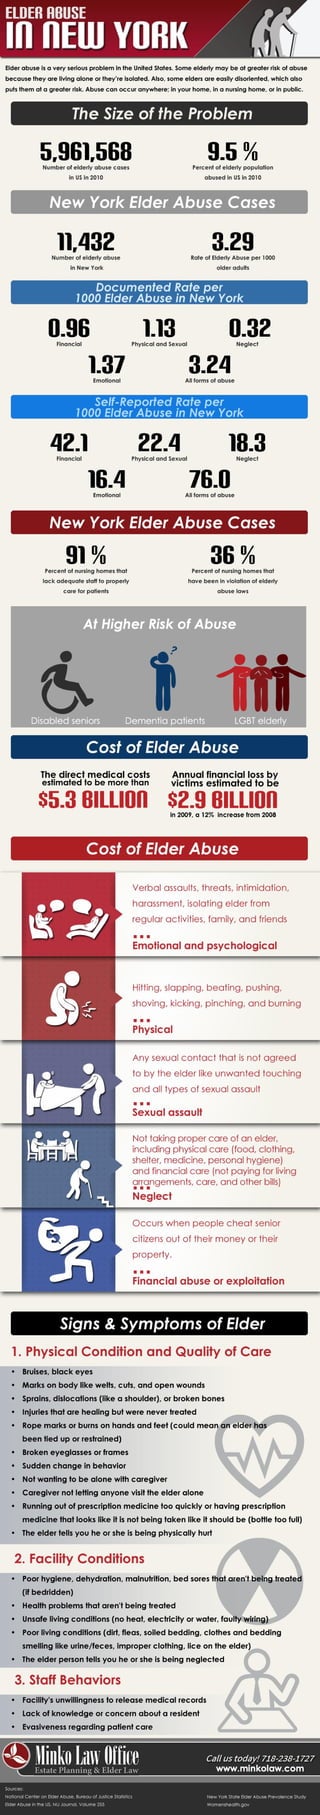 Elder Abuse in New York